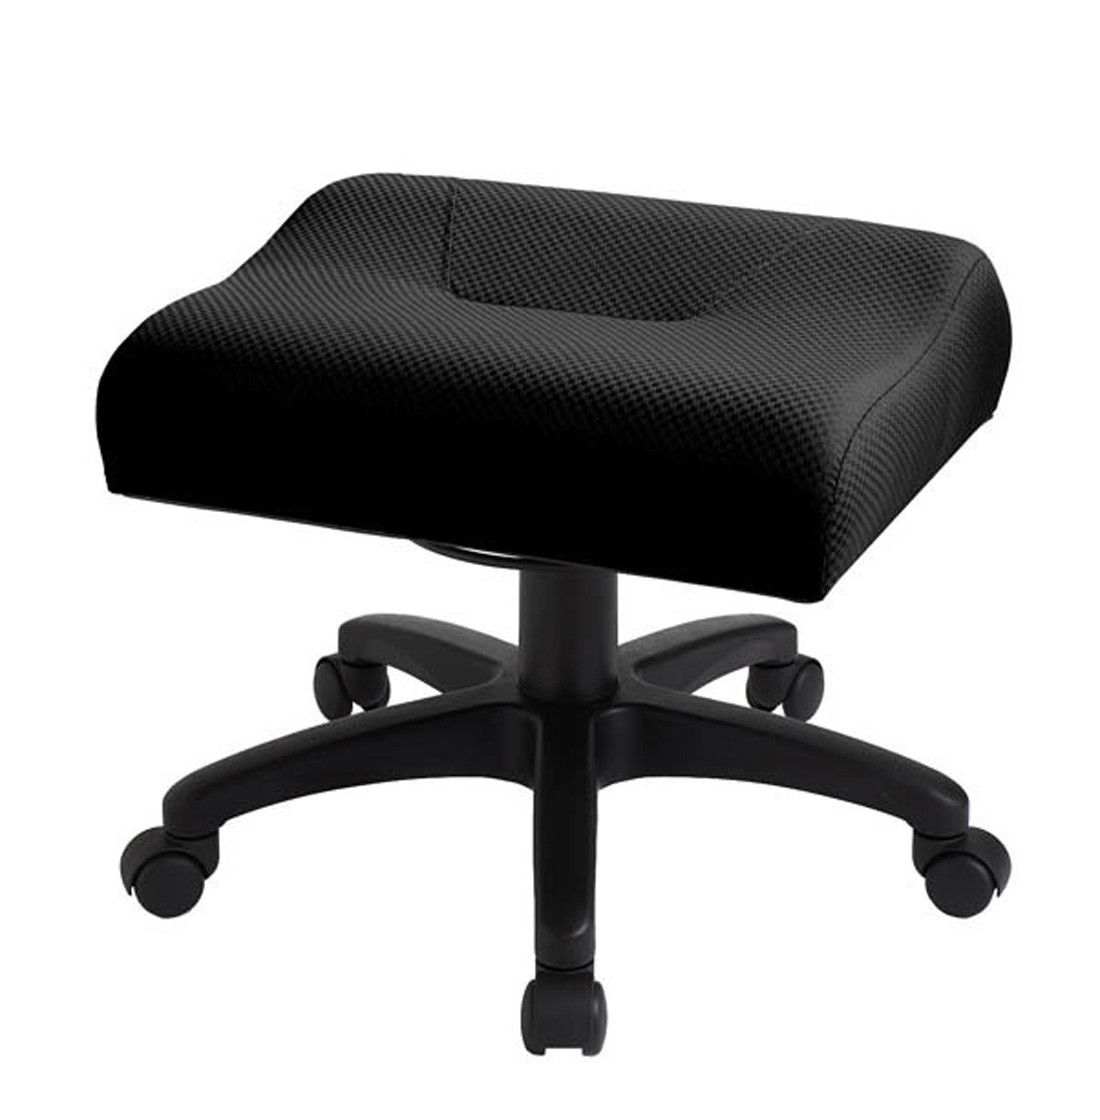 Adjustable Office Footrest, Adjustable Foot Rest Stool